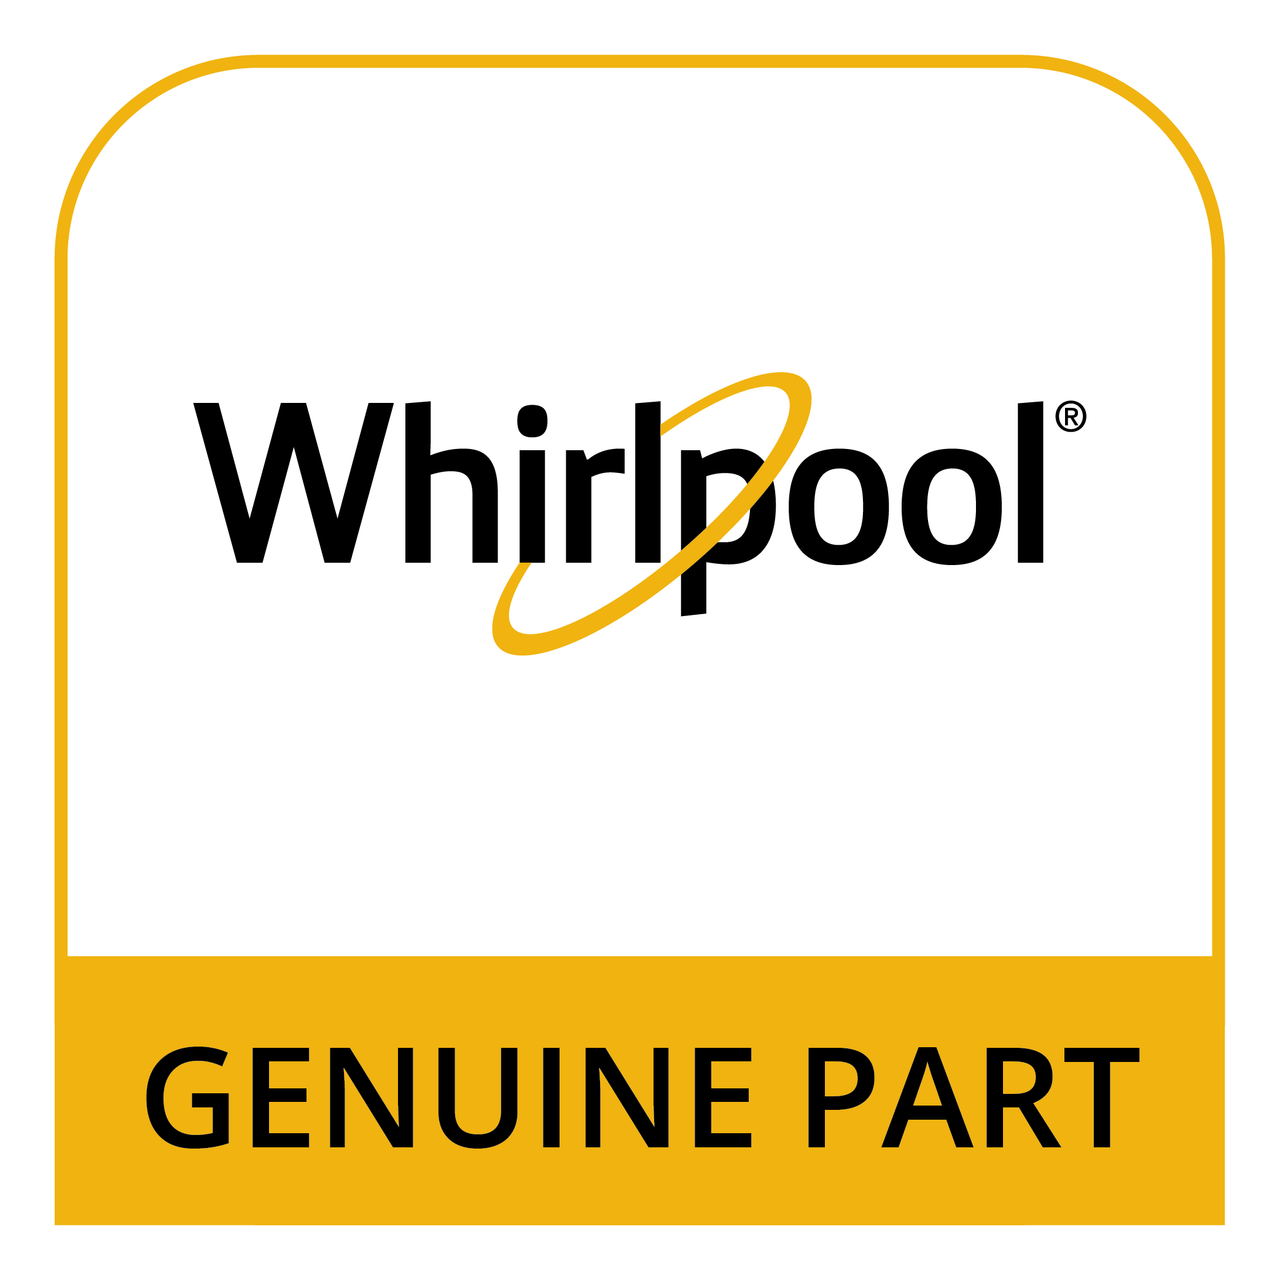 Whirlpool WFR108217 - 464 Blue L *Non-Wise* - Genuine Part